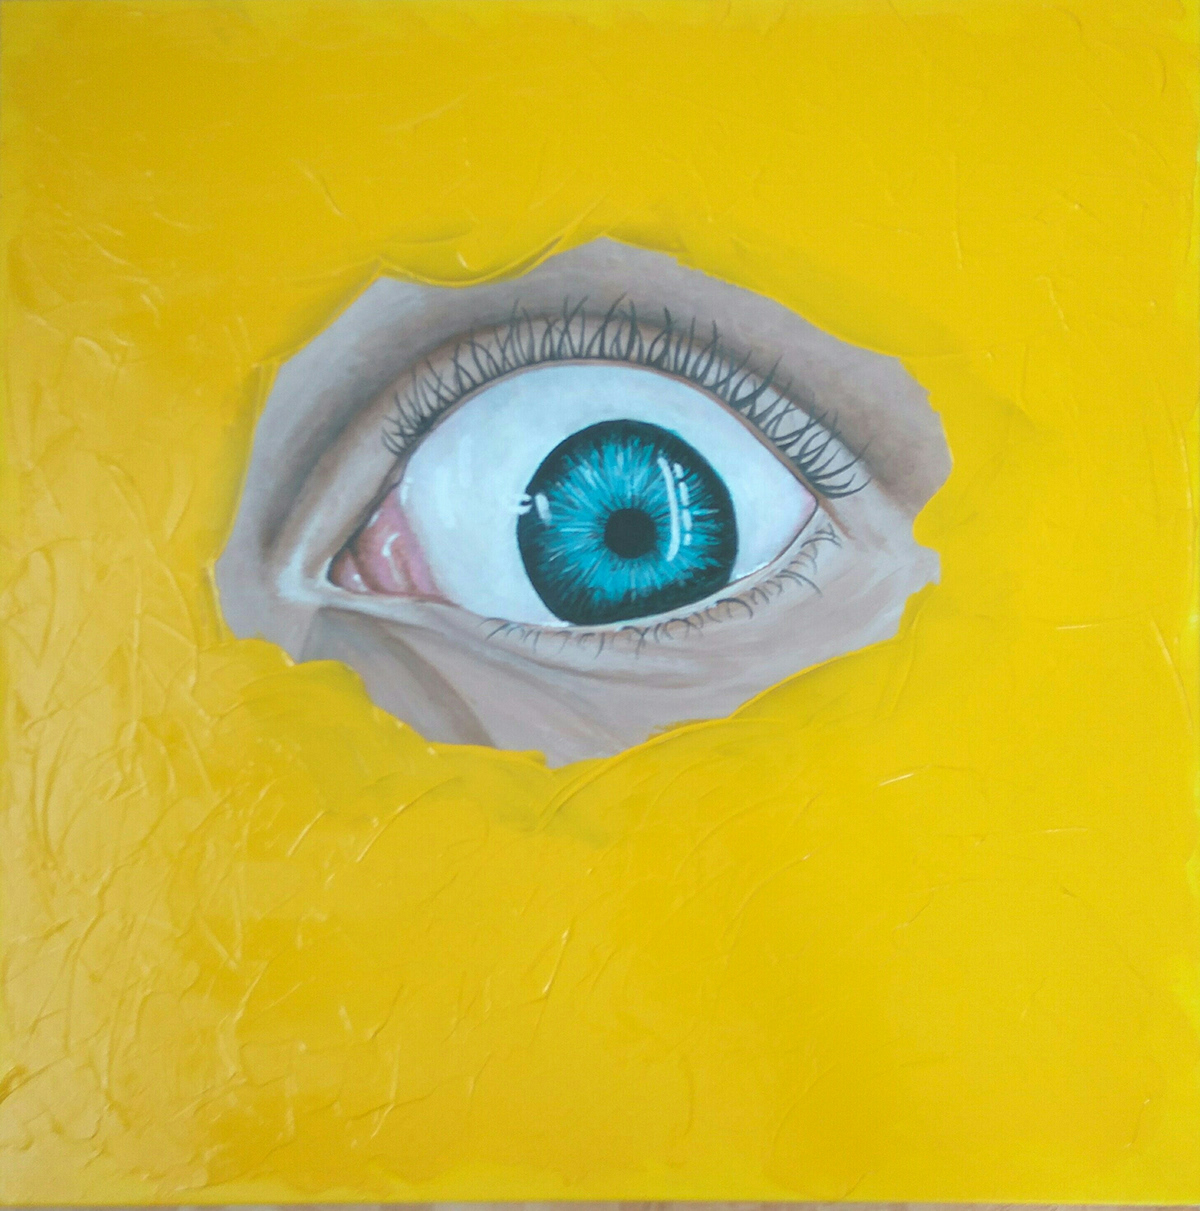 #painting #eye #yellow